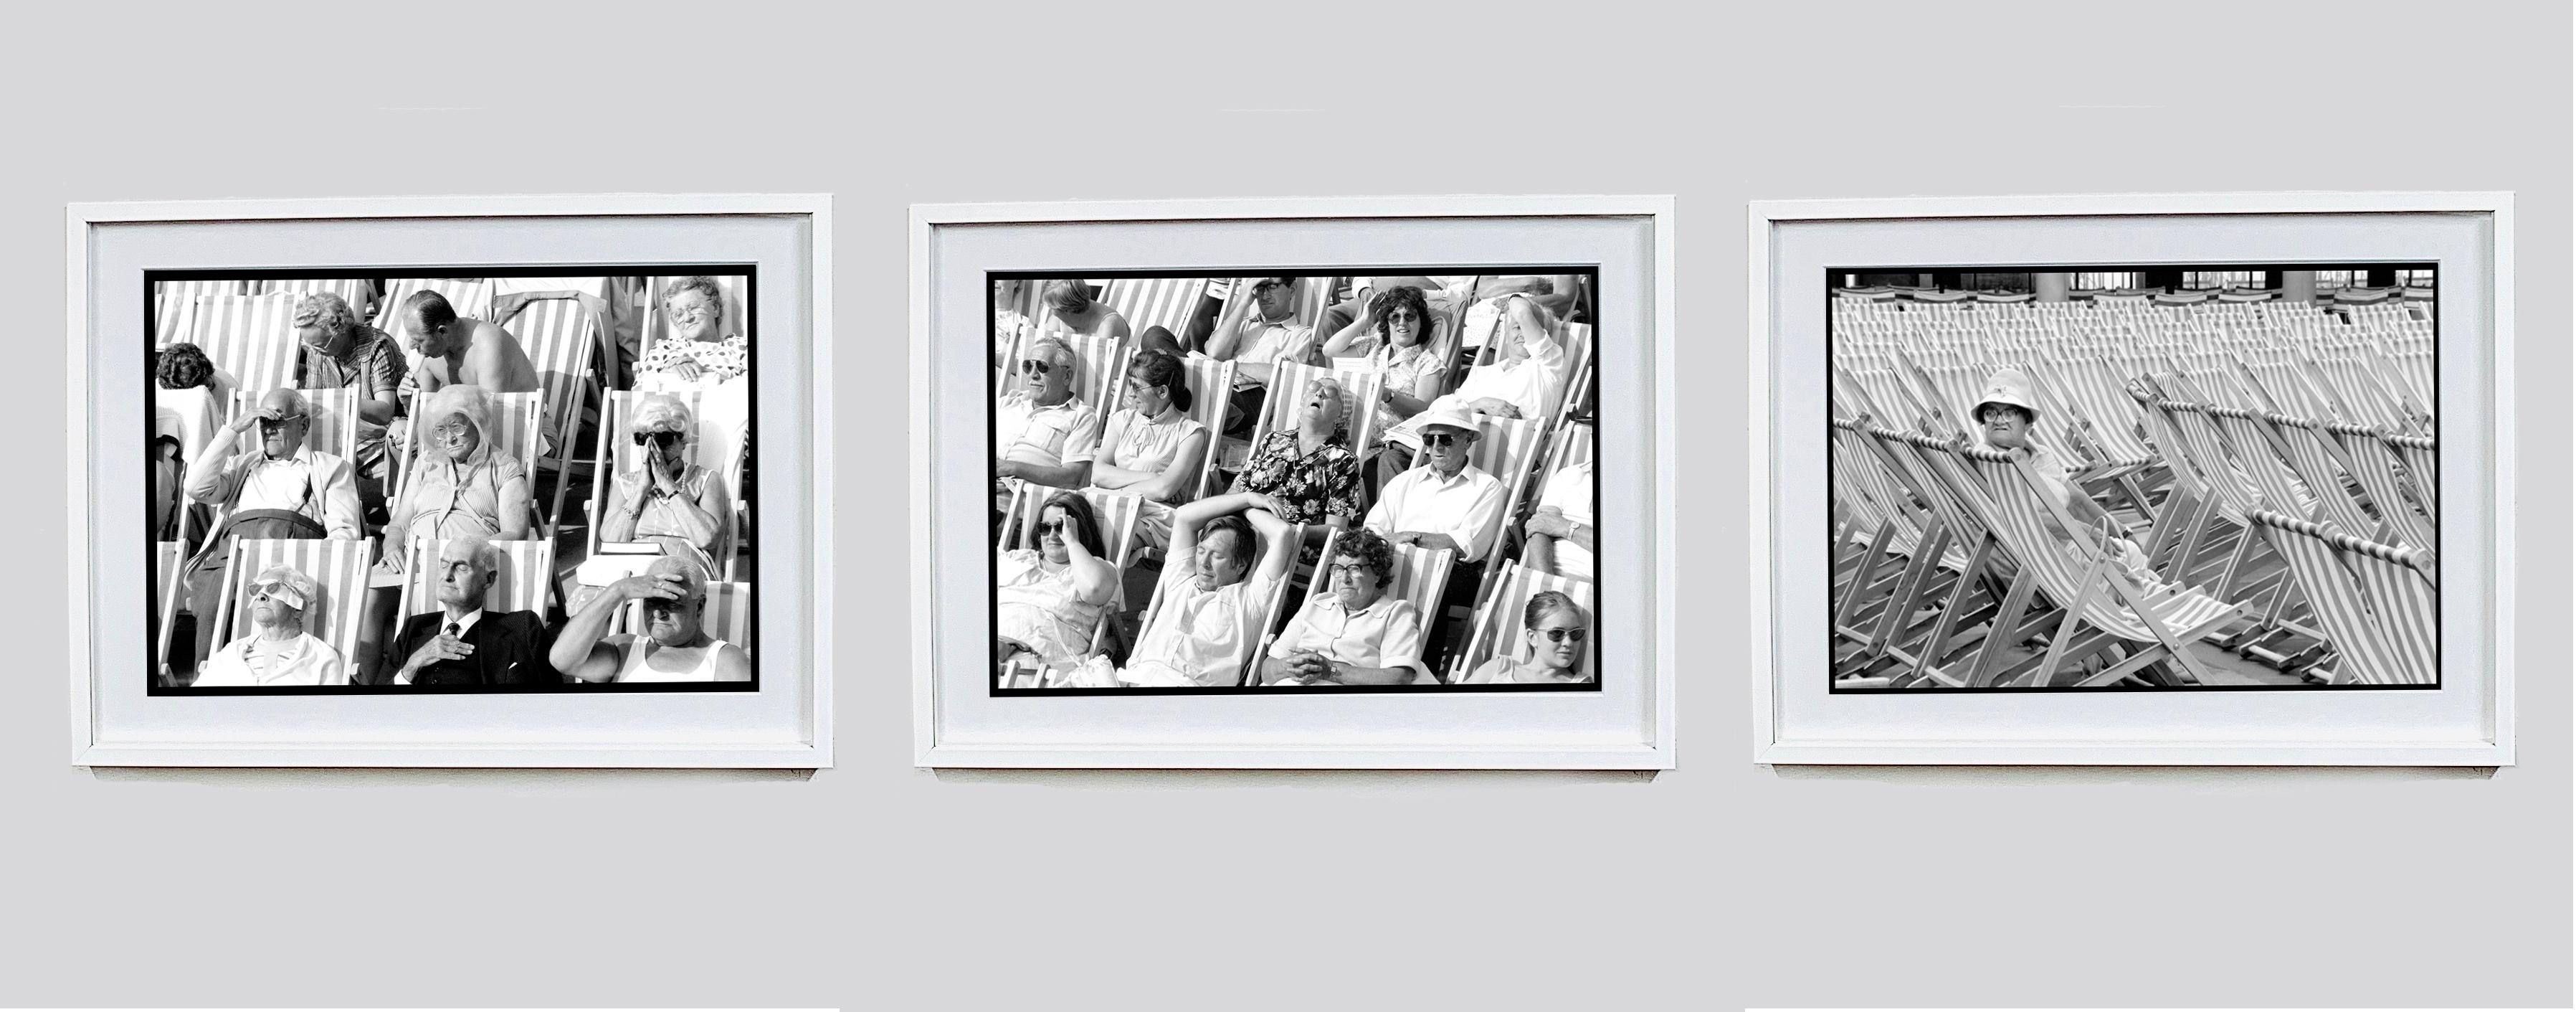 Bandstand II, Eastbourne, UK - Black and White Vintage Photography 2